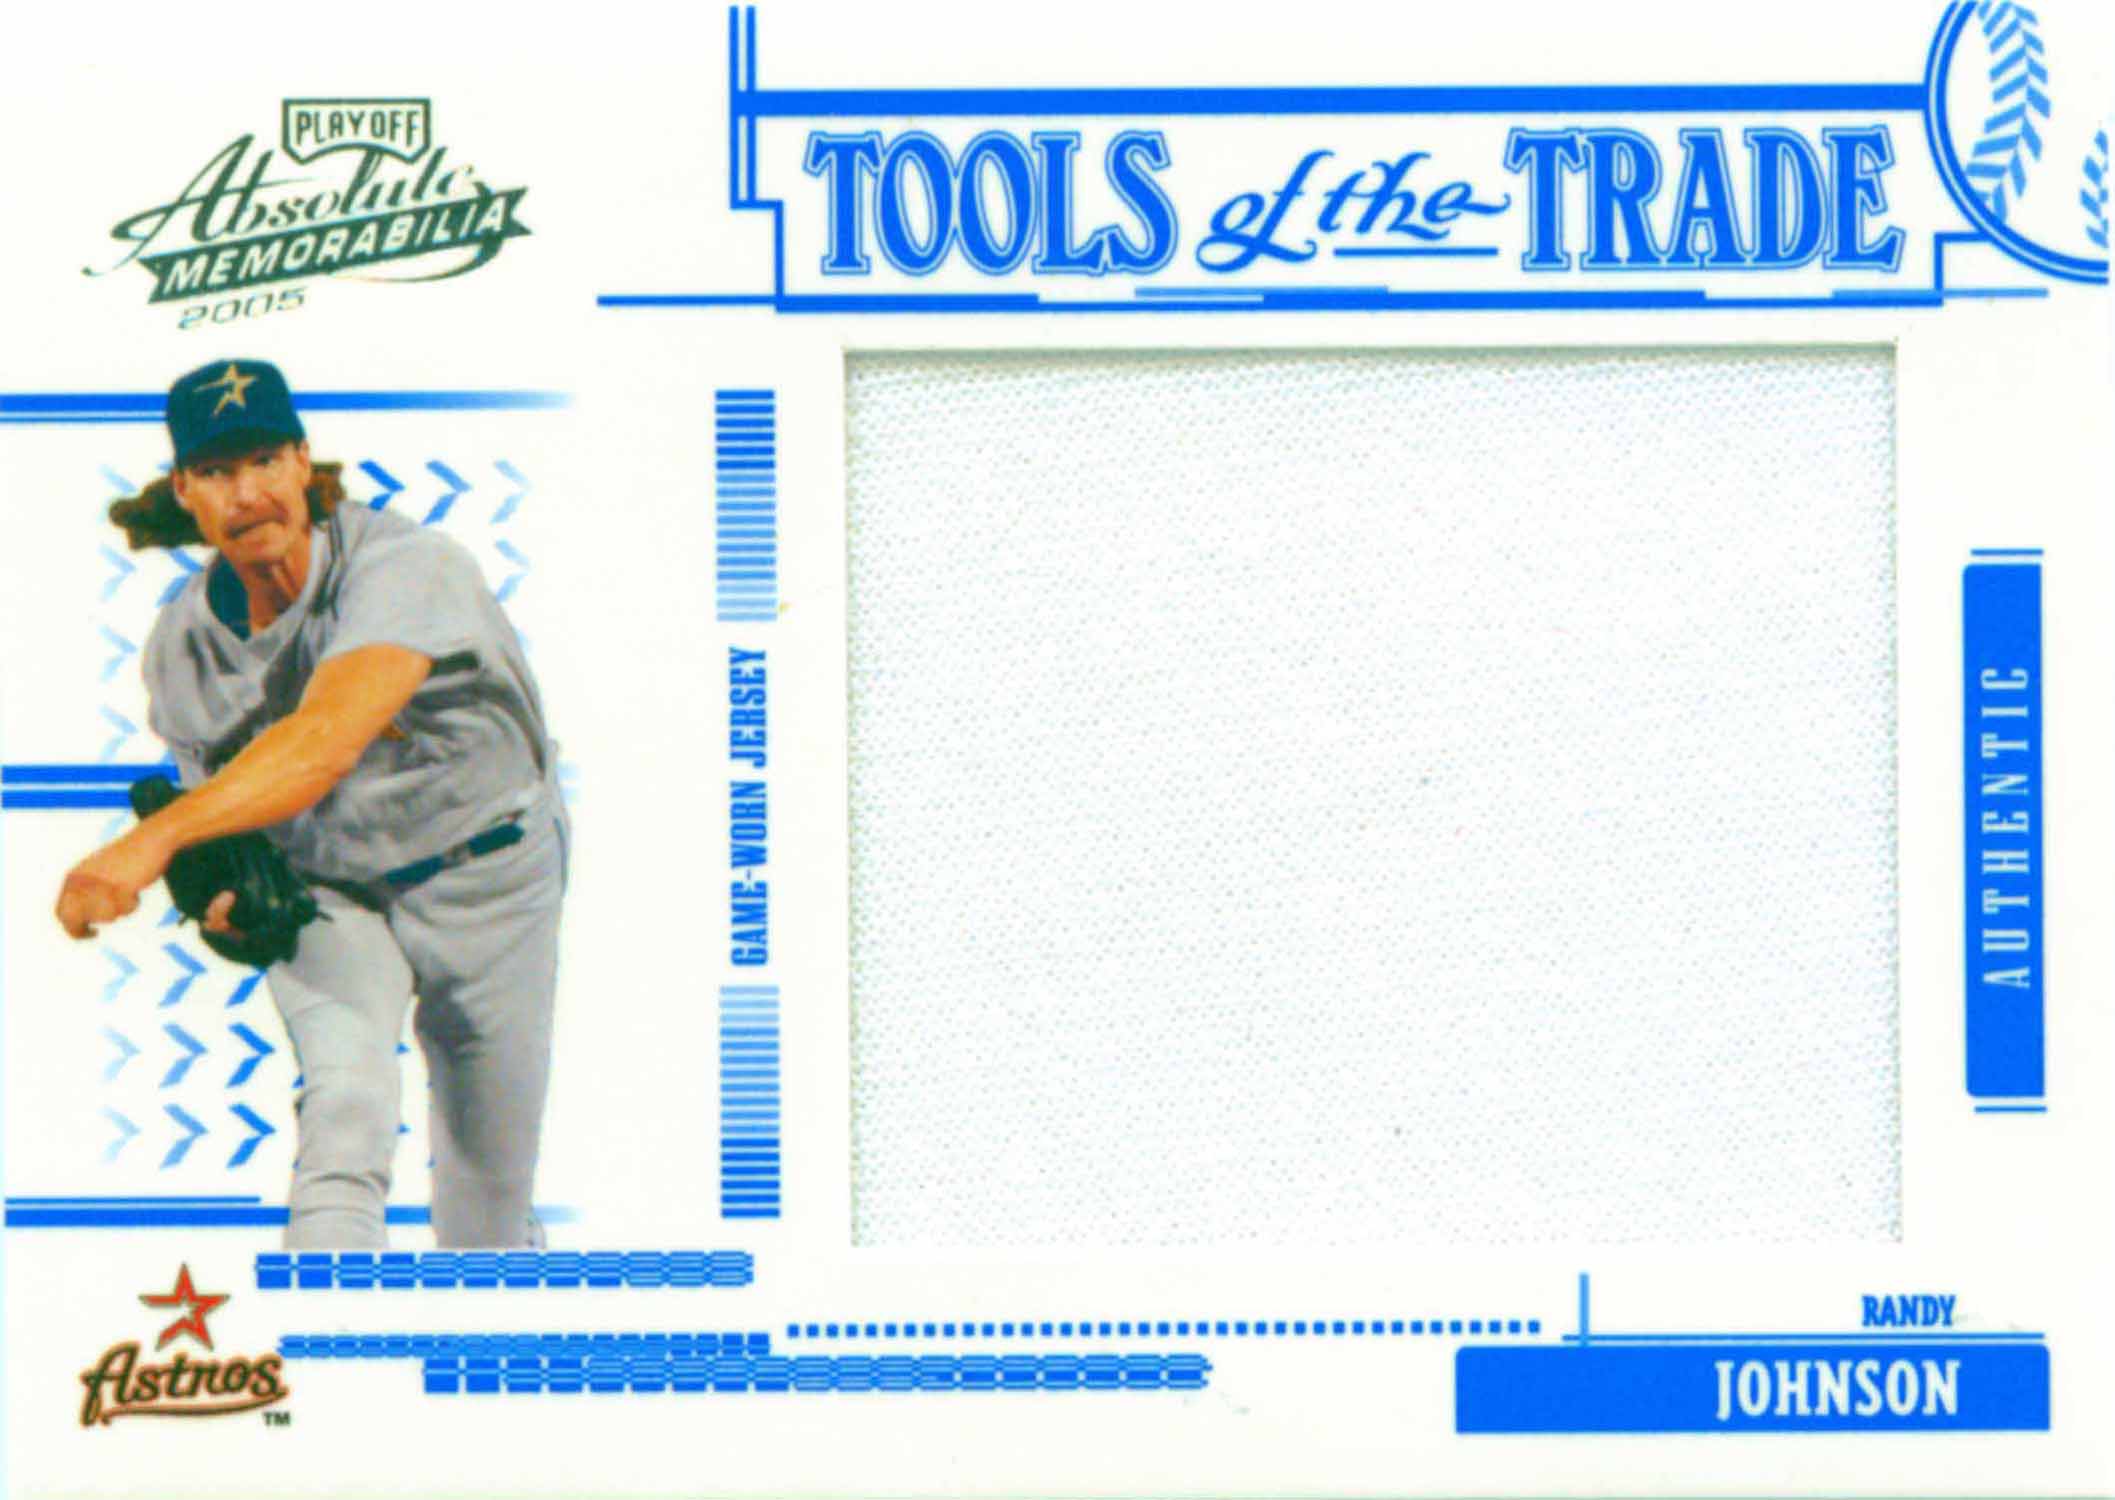 2005 Absolute Memorabilia Tools of the Trade Swatch Single Jumbo Pants